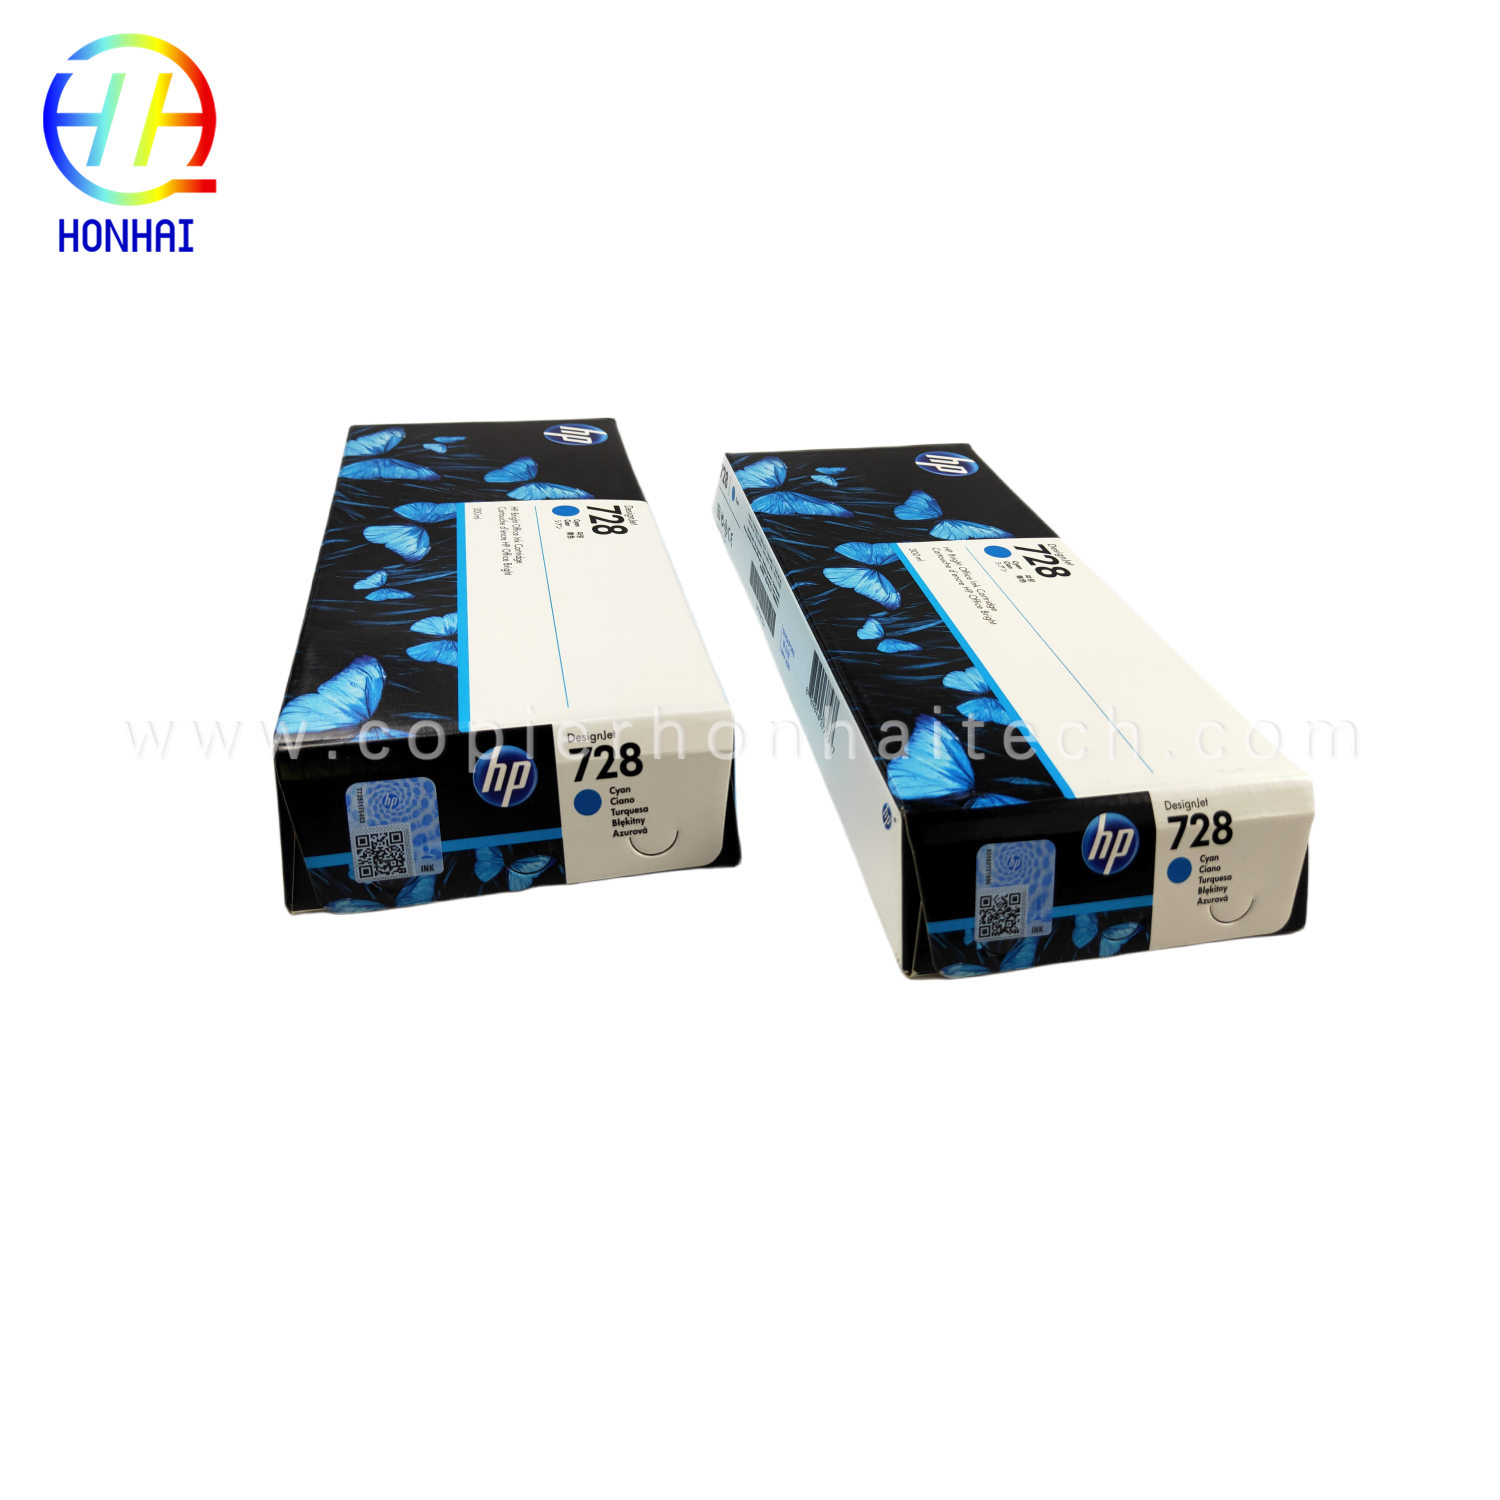 https://www.copierhonhaitech.com/original-new-ink-cartridge-cyan-for-hp-designjet-t730-and-t830-large-format-plotter-printers-and-hp-729-designjet-printhead- 728-f9k17a-produkto/